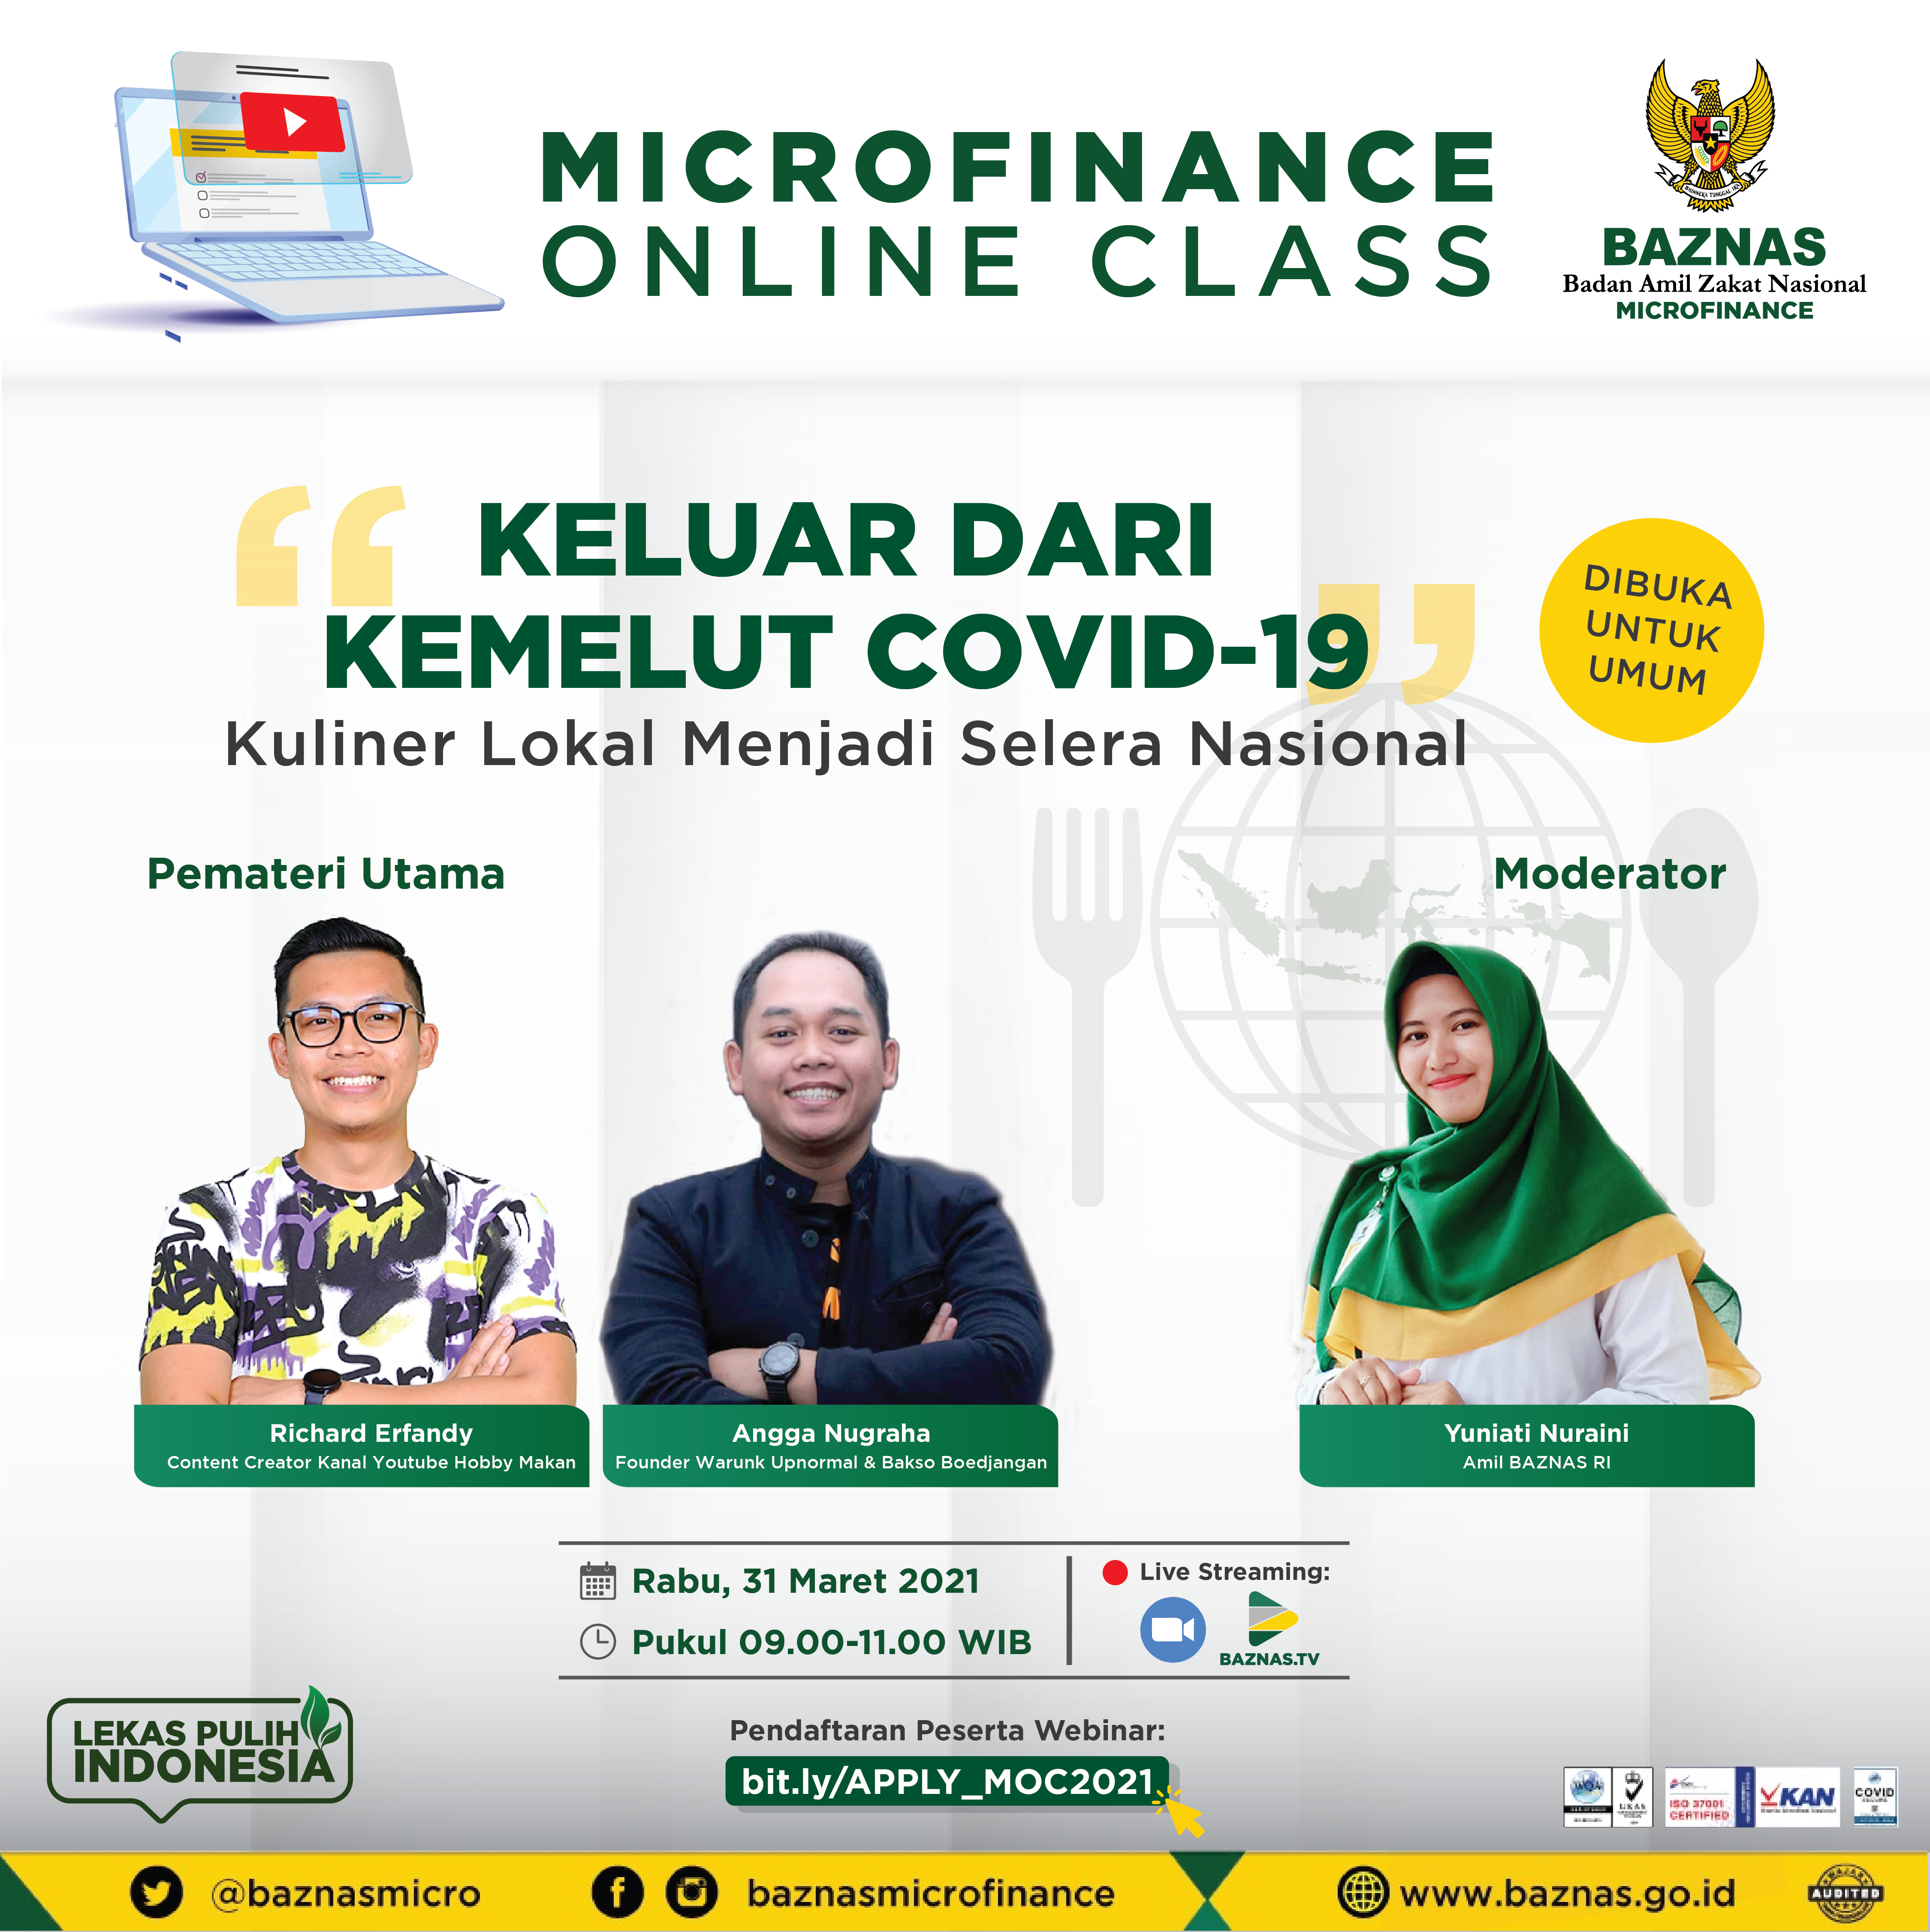 Microfinance Online Class 2021 - Keluar dari Kemelut Covid-19